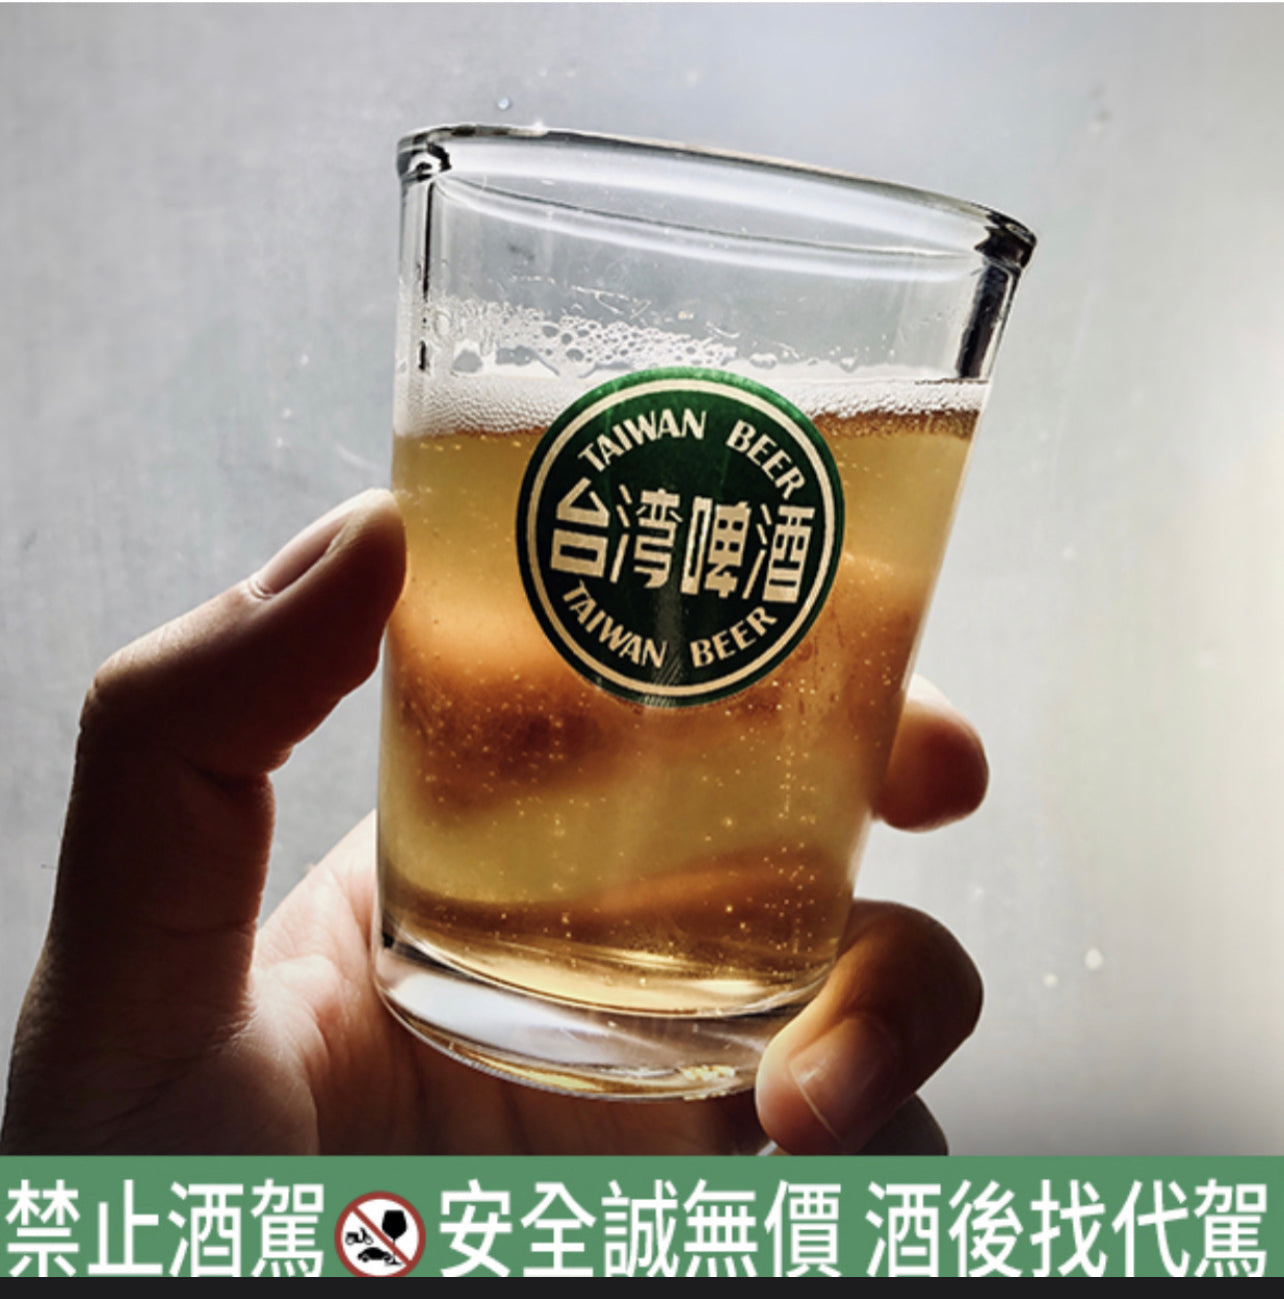 Petit verre à bière de Taïwan Beer - 143ml